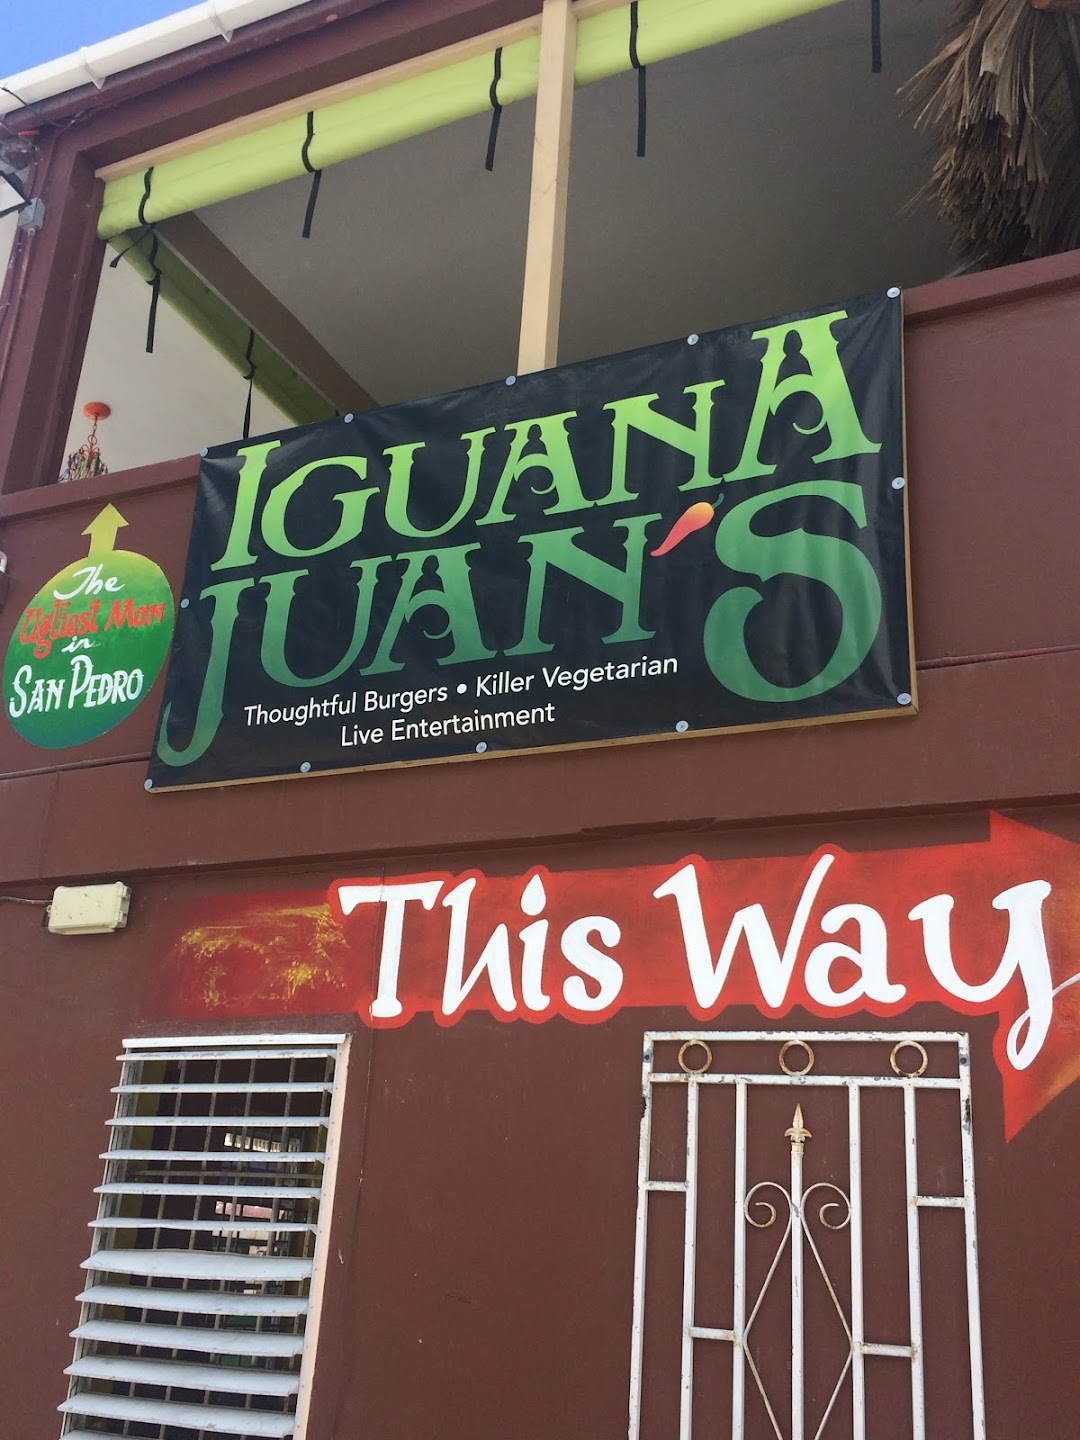 Iguana Juans Restaurant & Bar